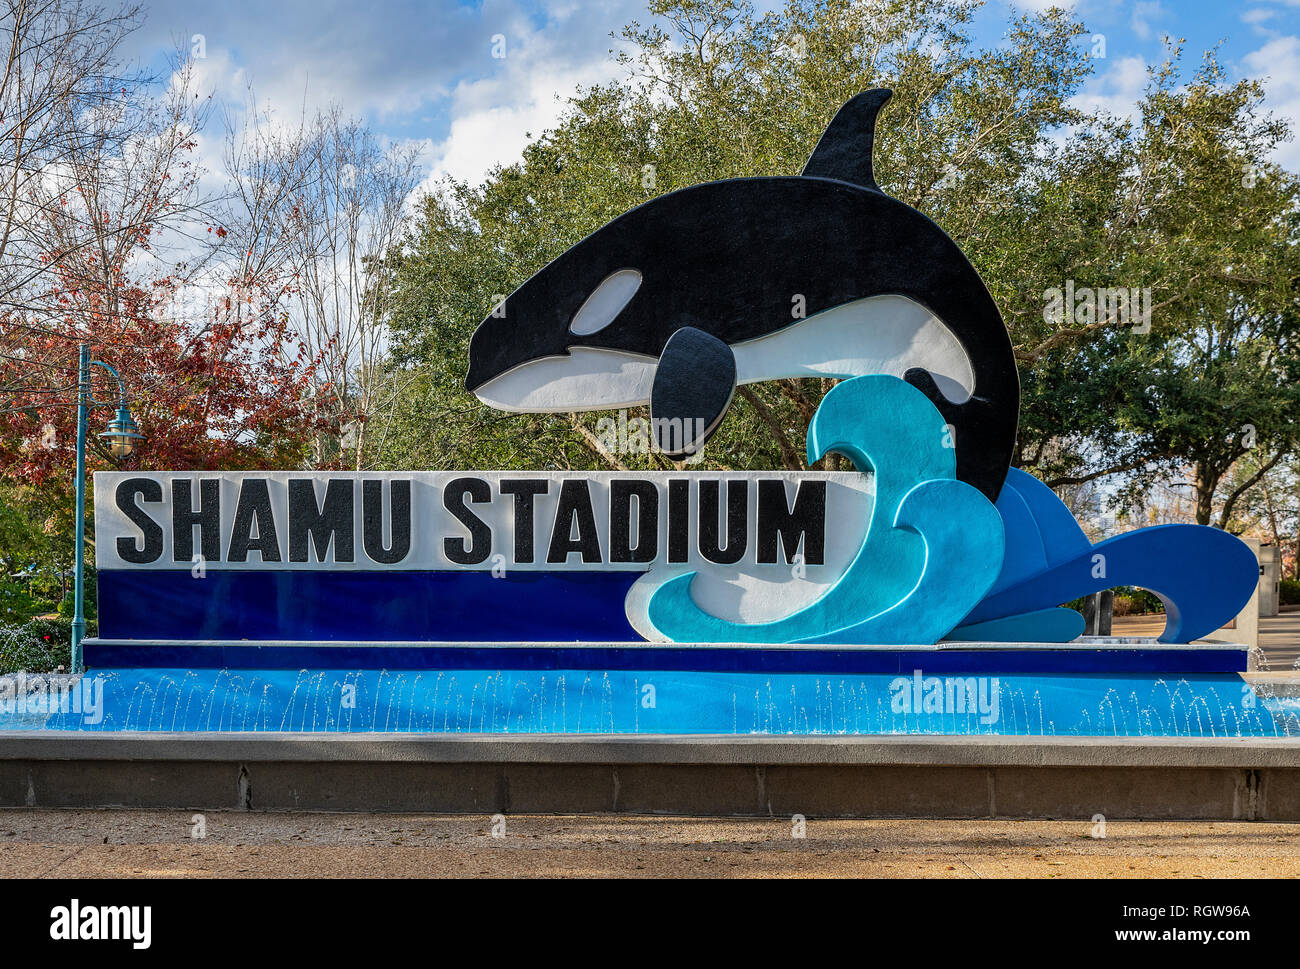 Shamu Stadium at Seaworld marine park, Orlando Florida, USA. Stock Photo